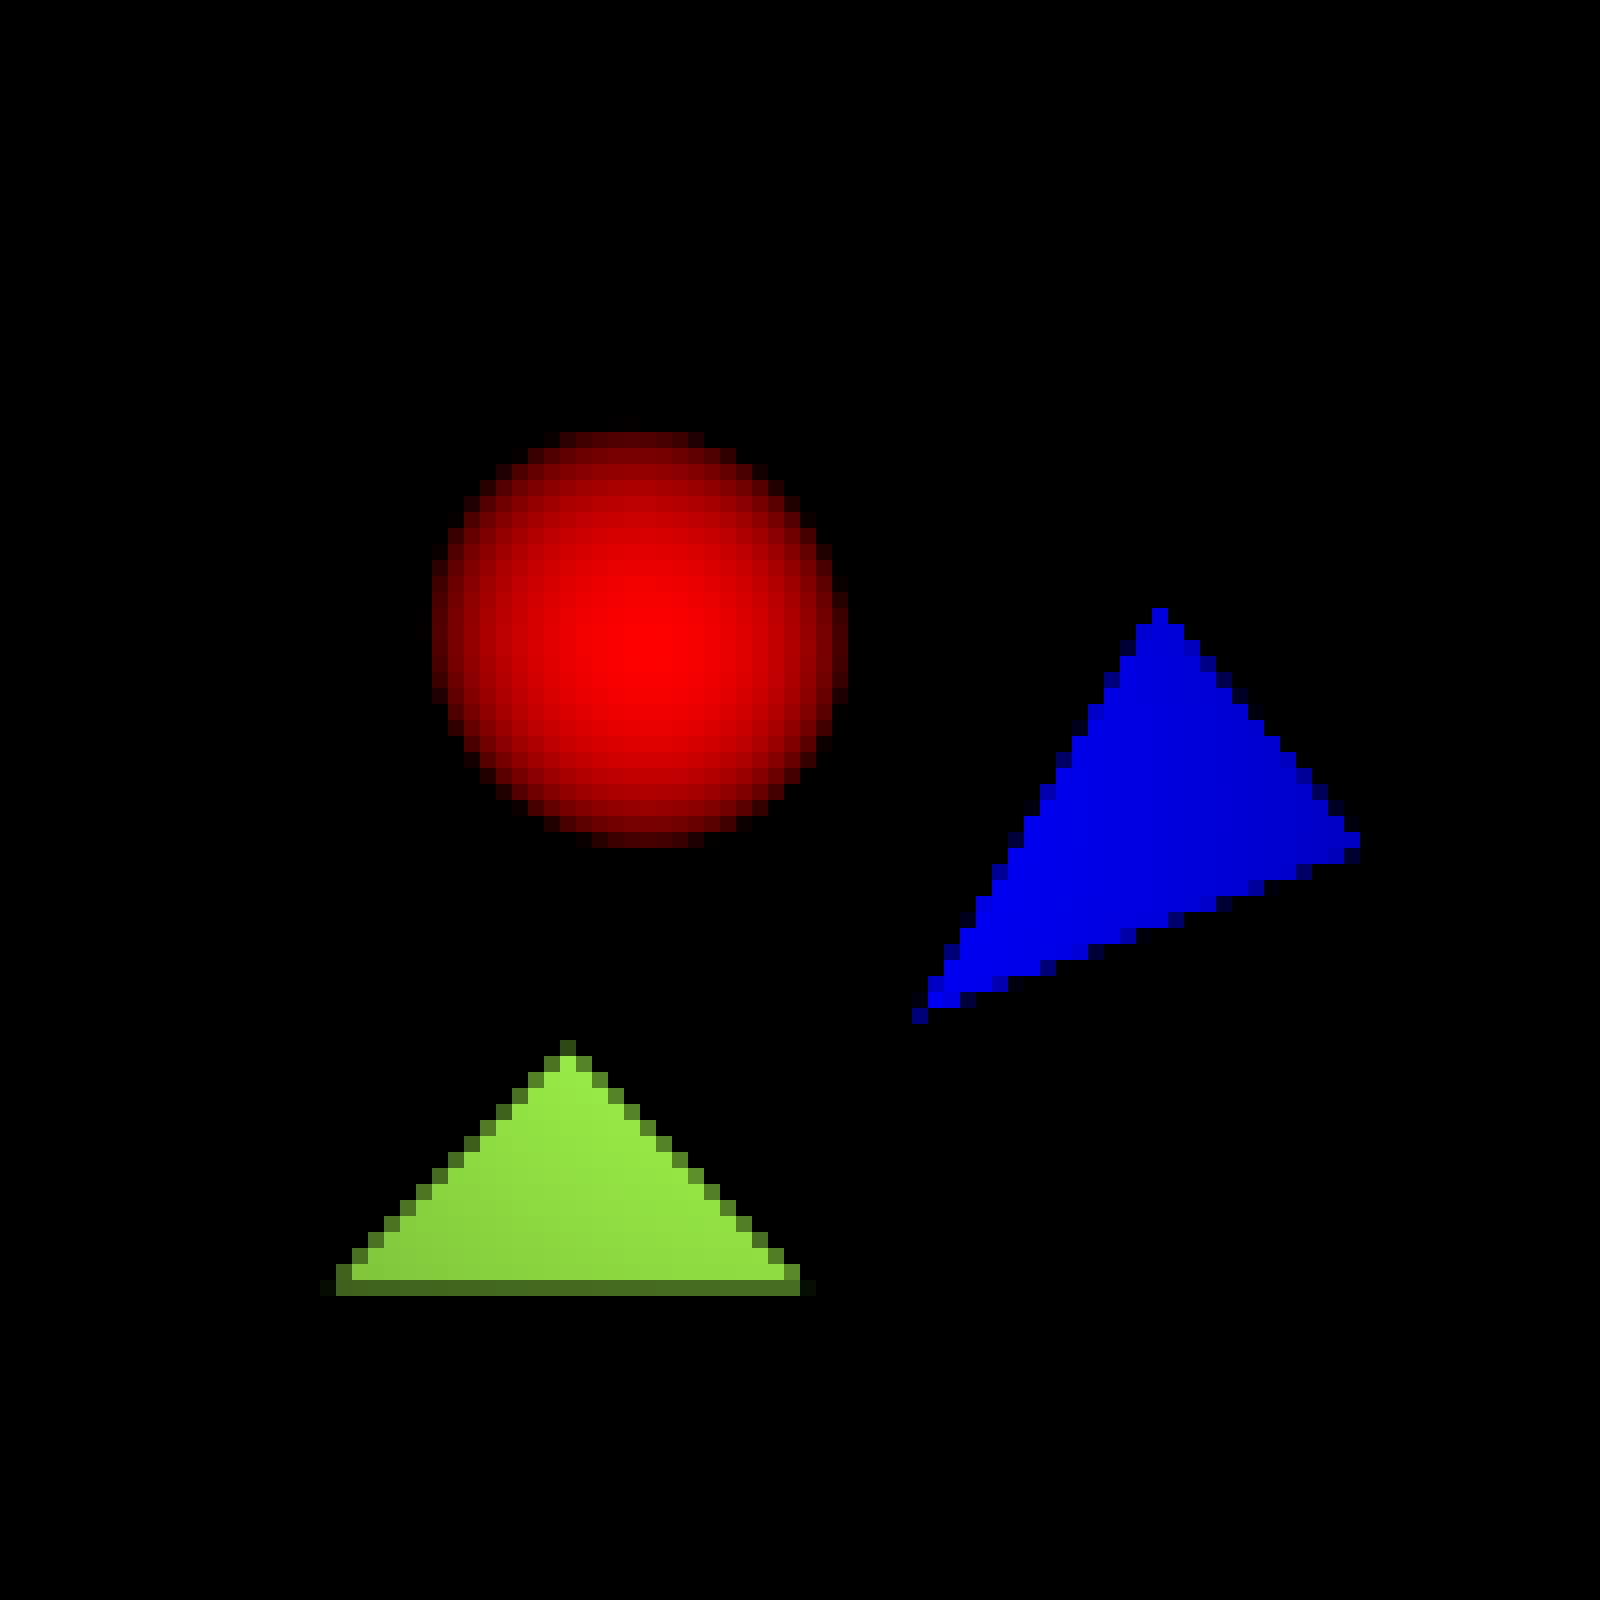 Primitives with regular sampling and a box filter